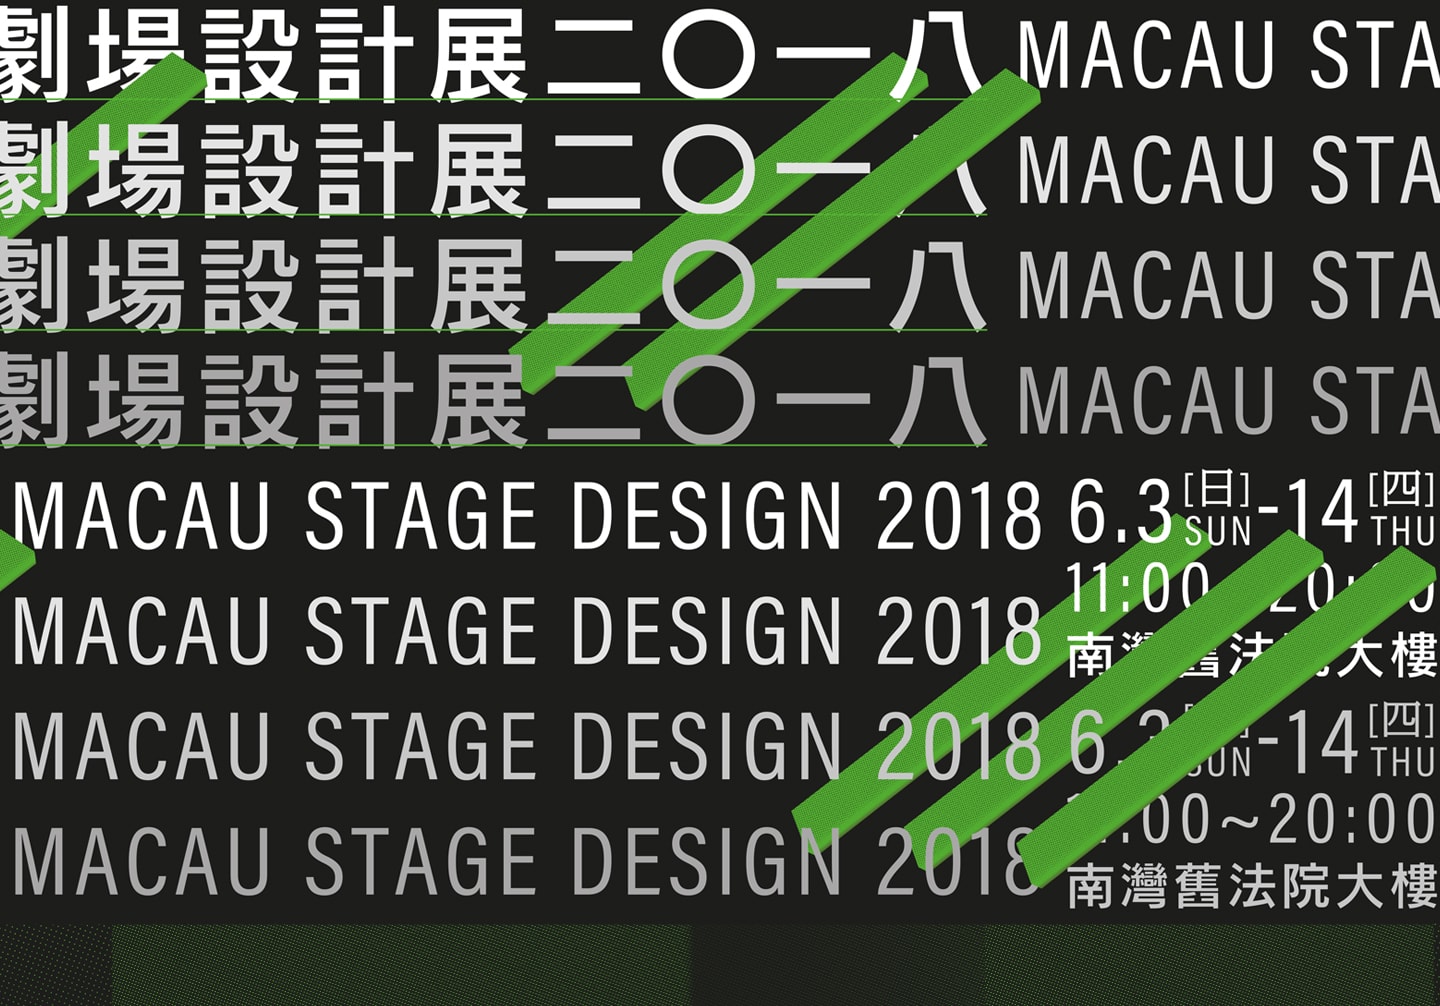 Macau Stage Design 2018